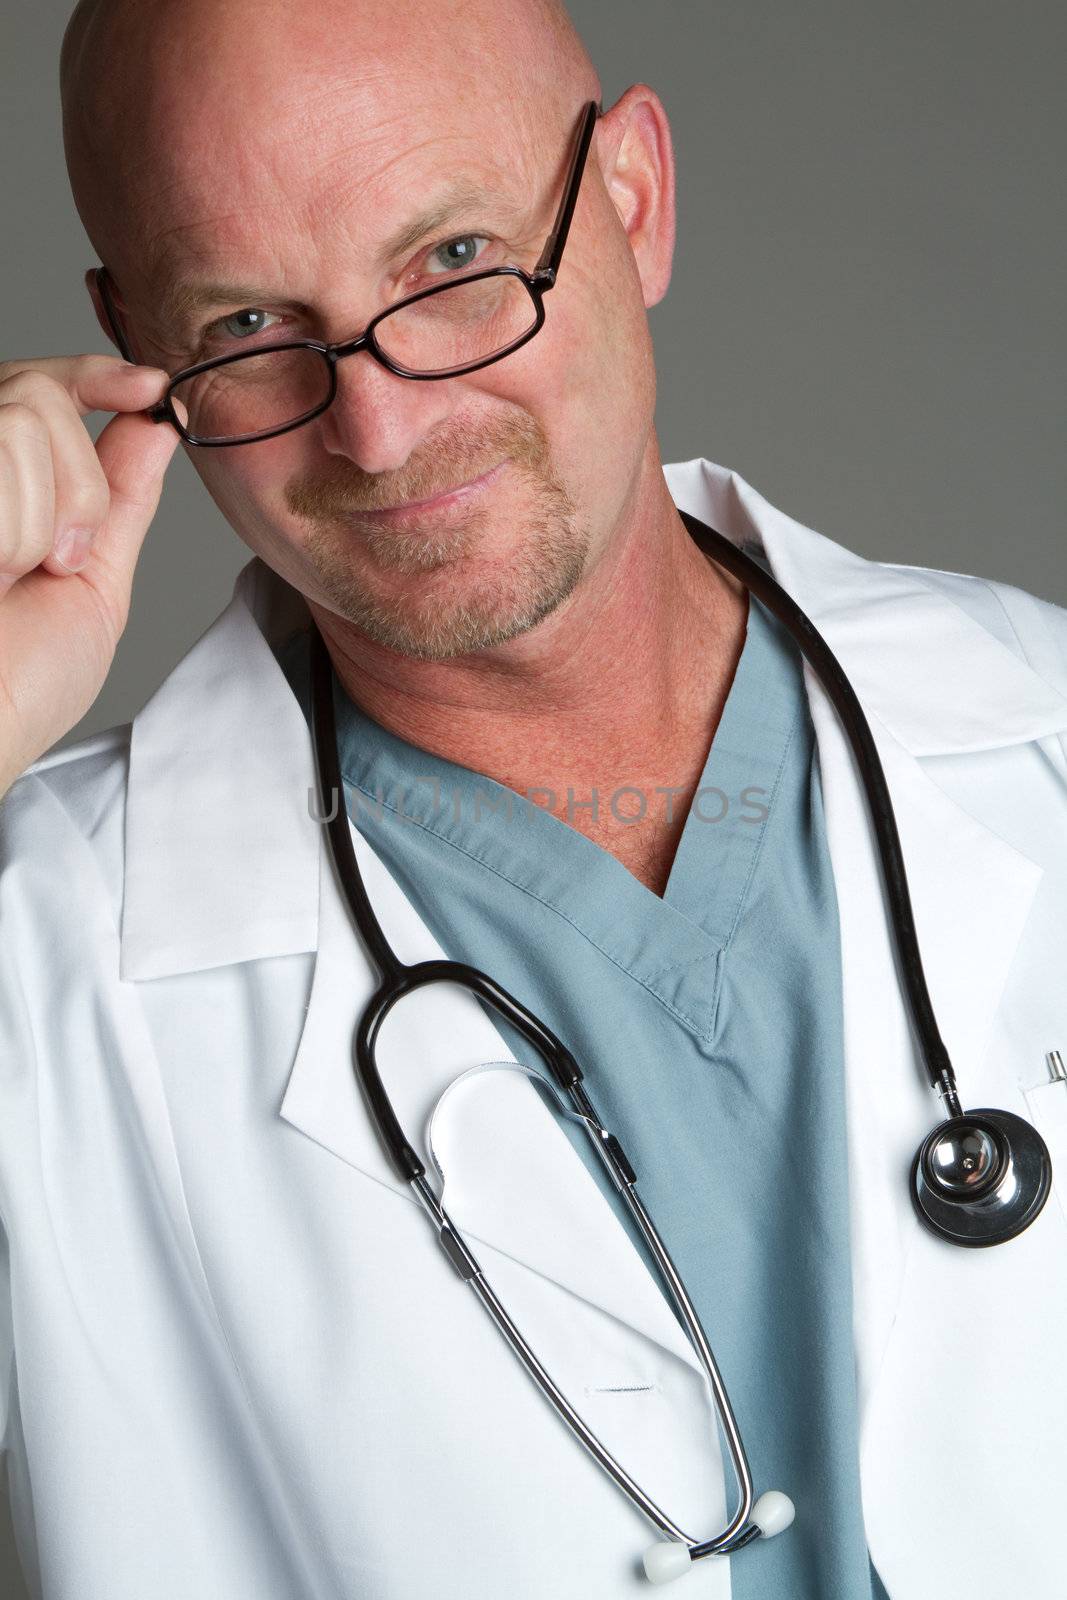 Handsome smiling doctor wearing glasses